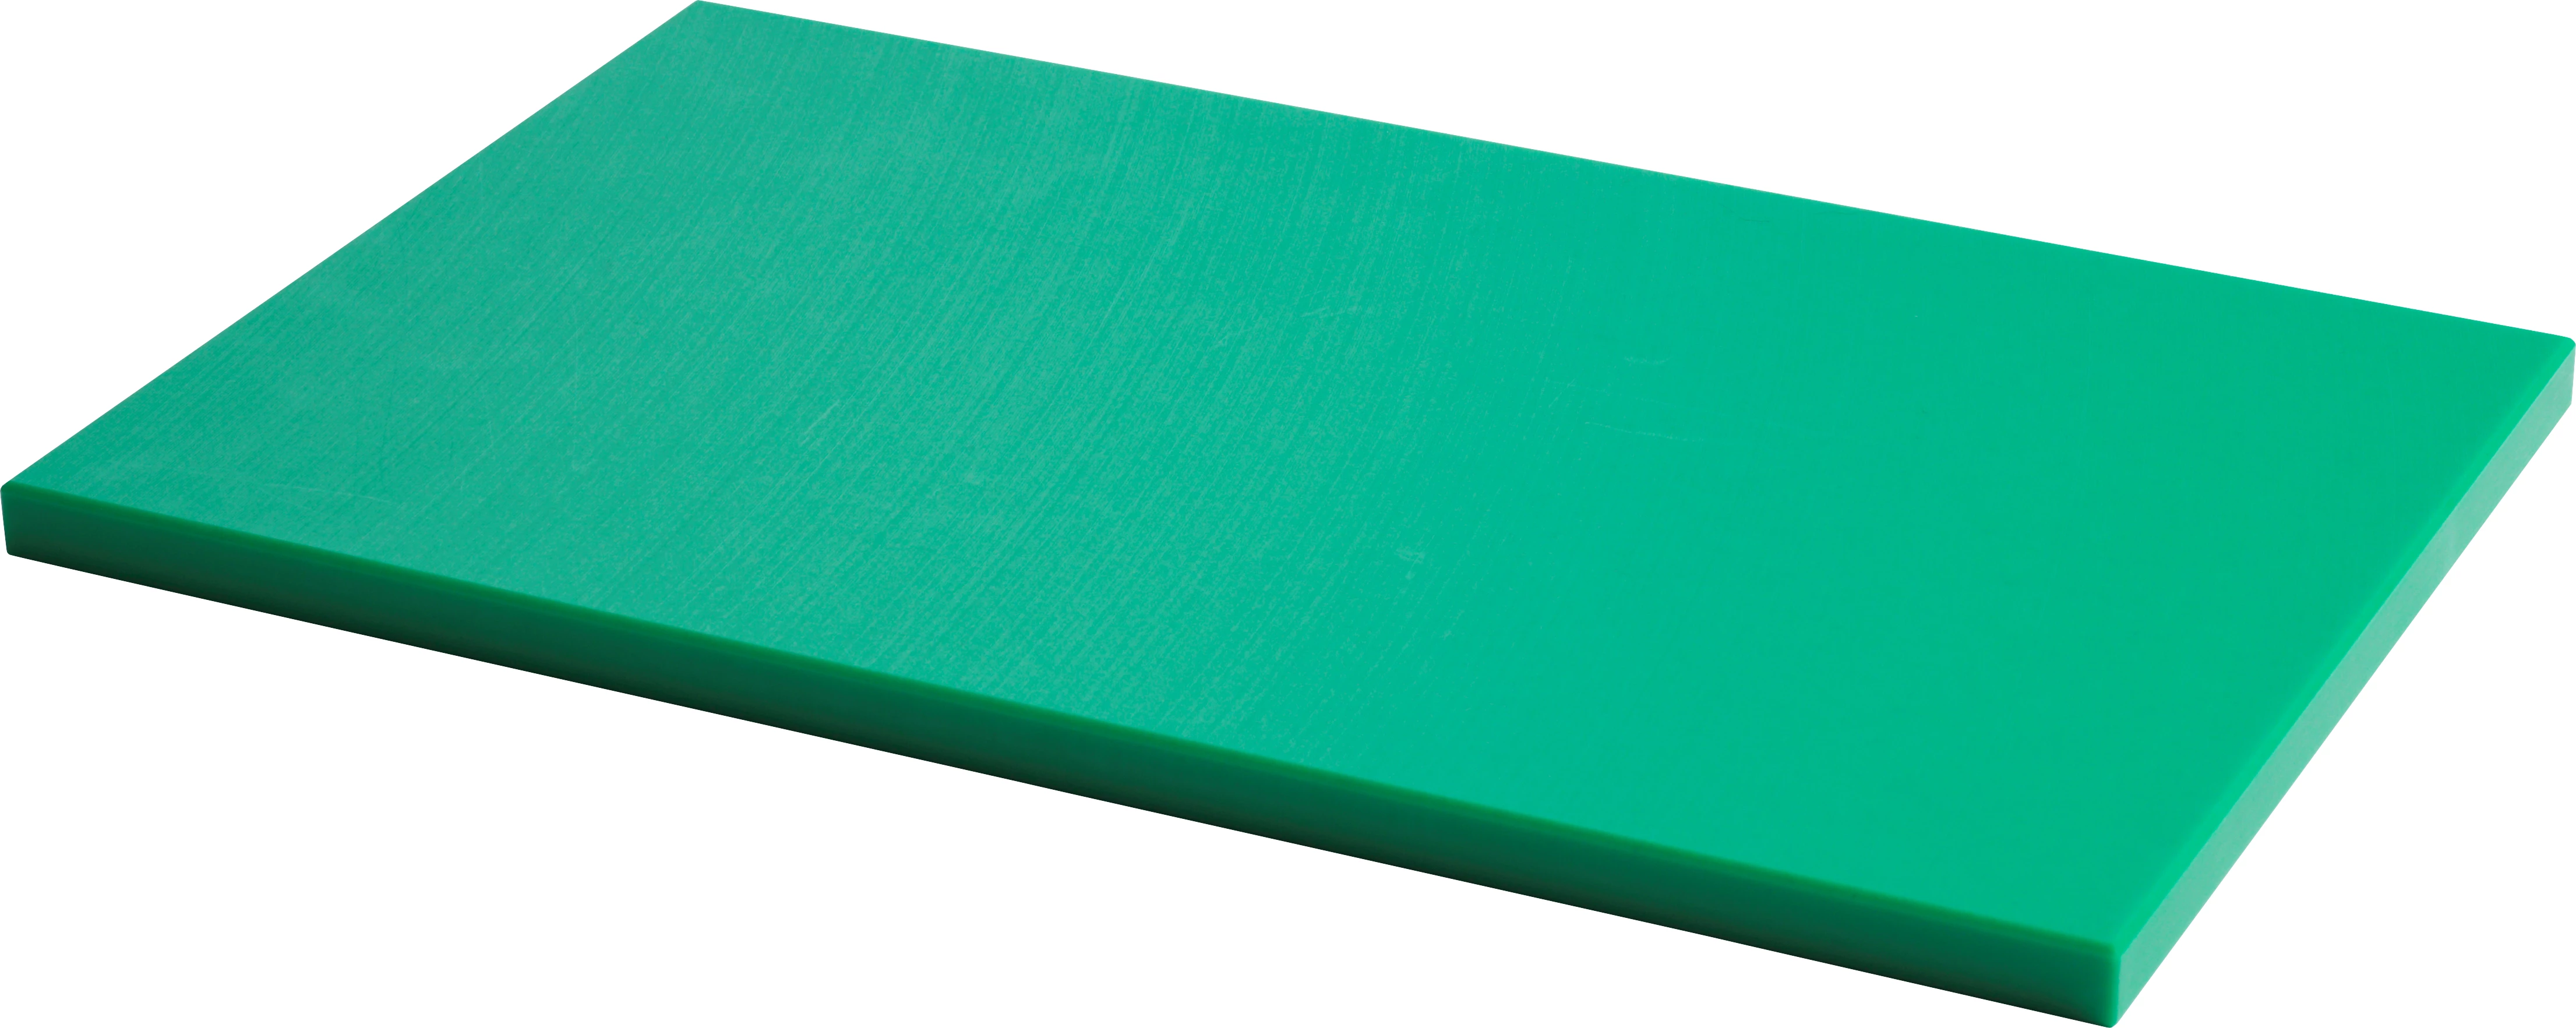 Euroboard skæreplanke, grøn, 40 x 25 x 1,5 cm